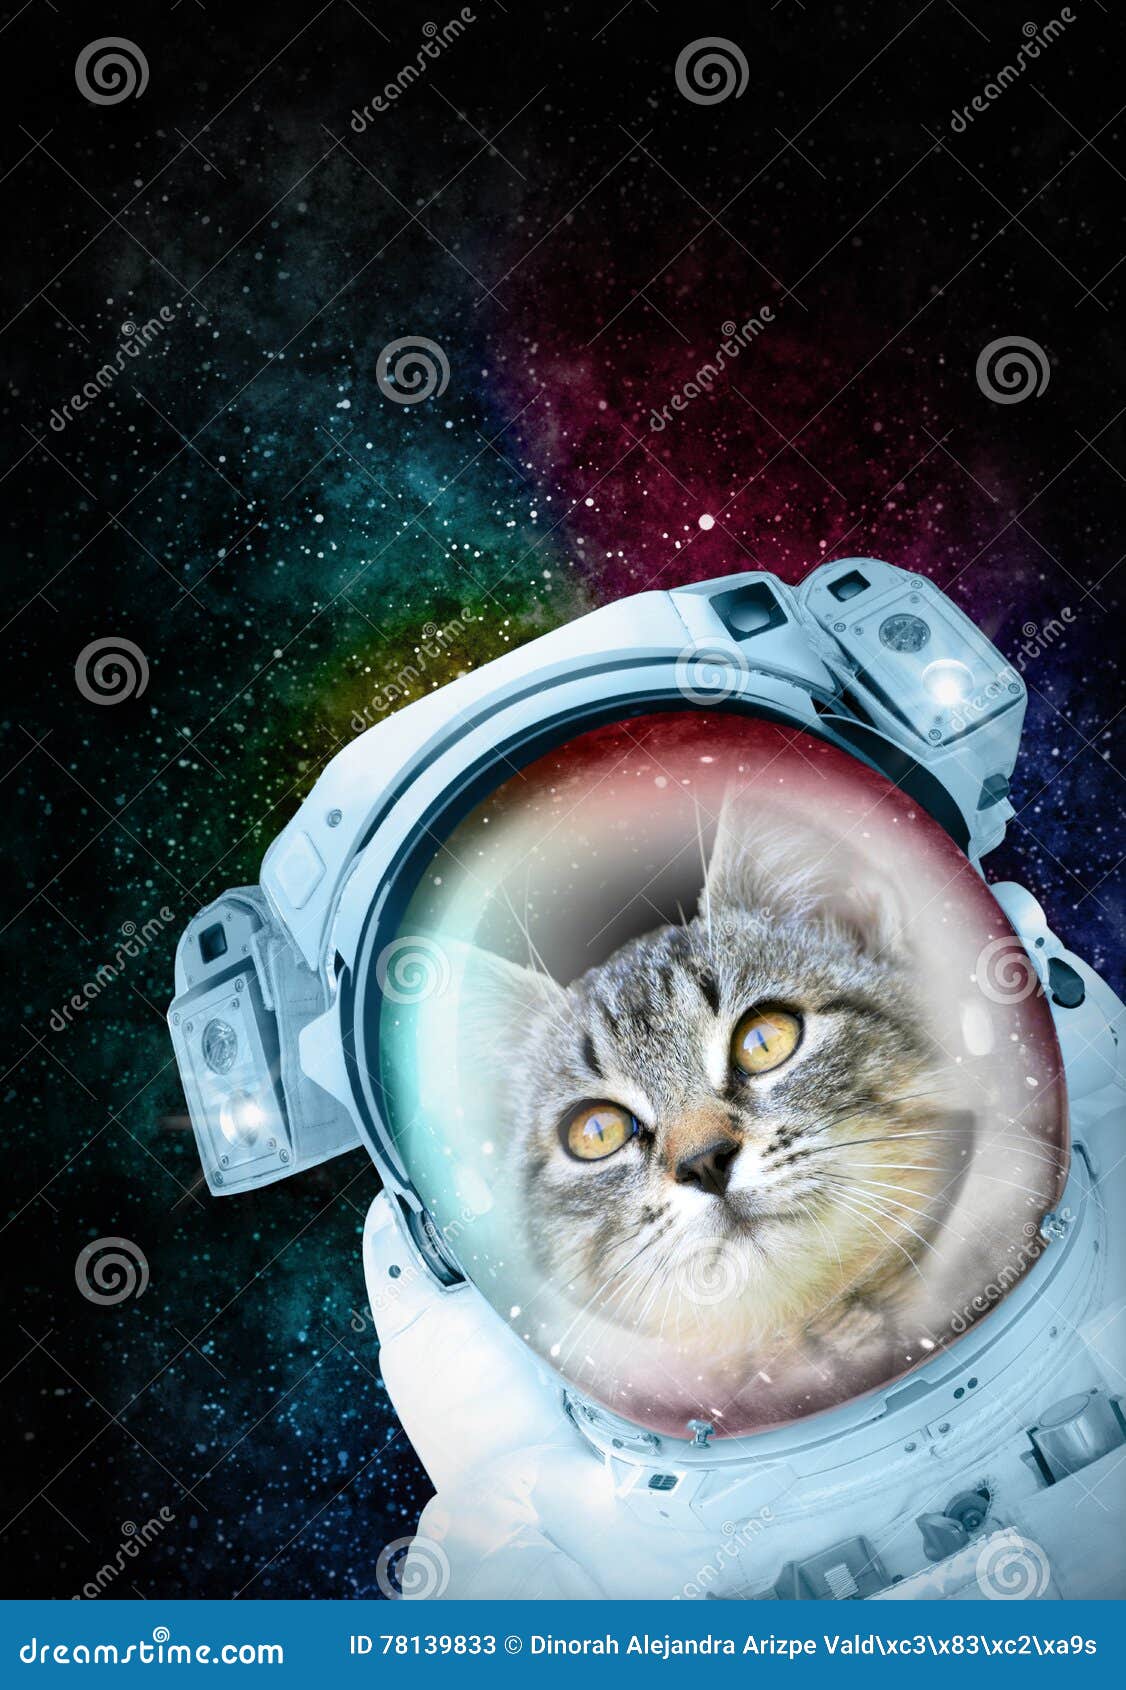 astronaut cat exploring the space